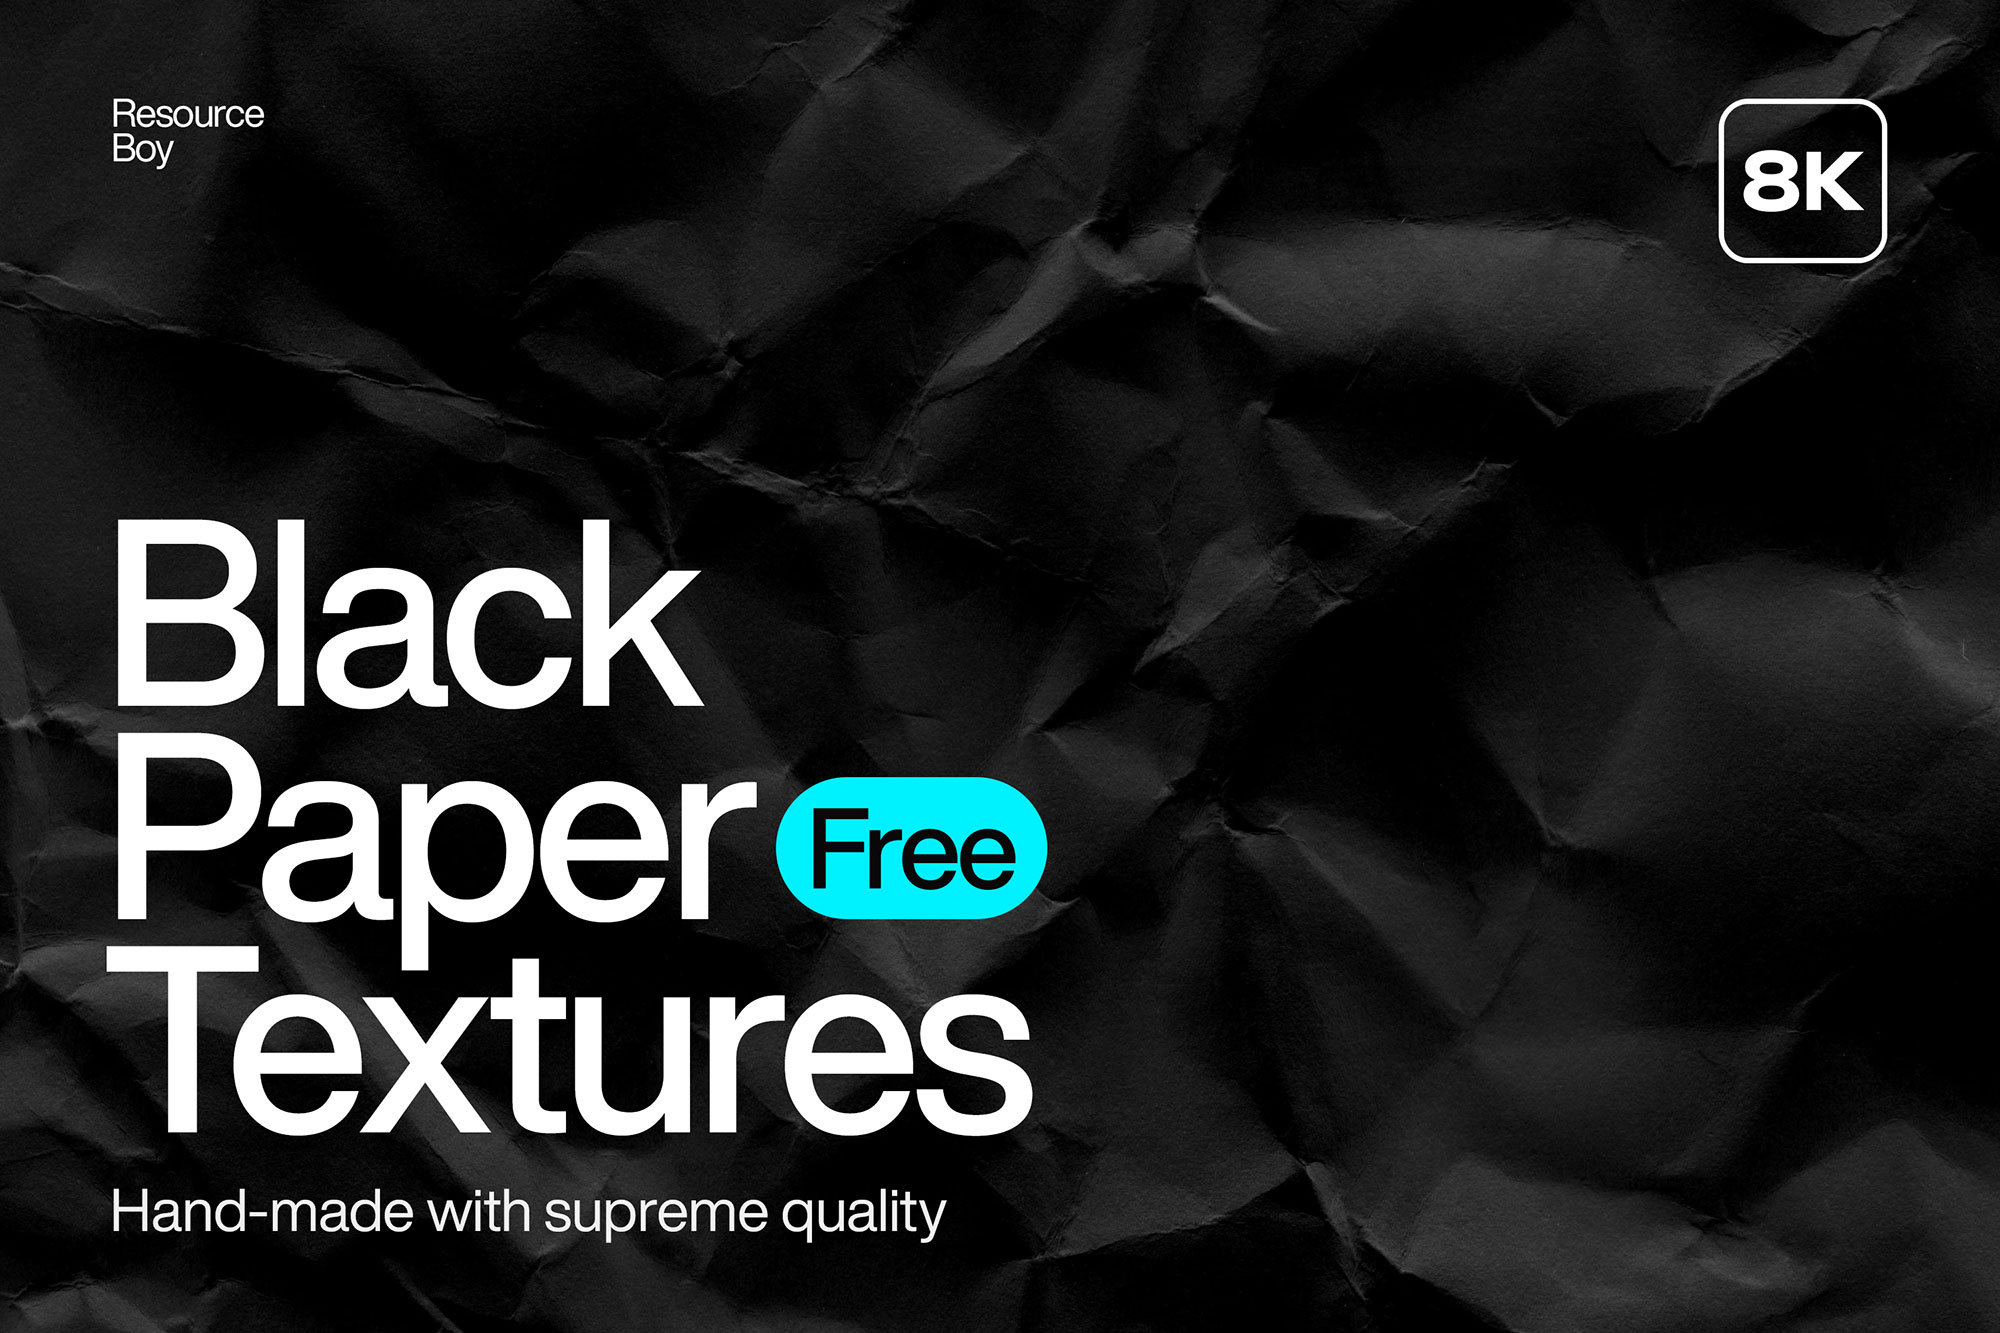 50+ Free Black Paper Textures [8K Resolution] - Resource Boy